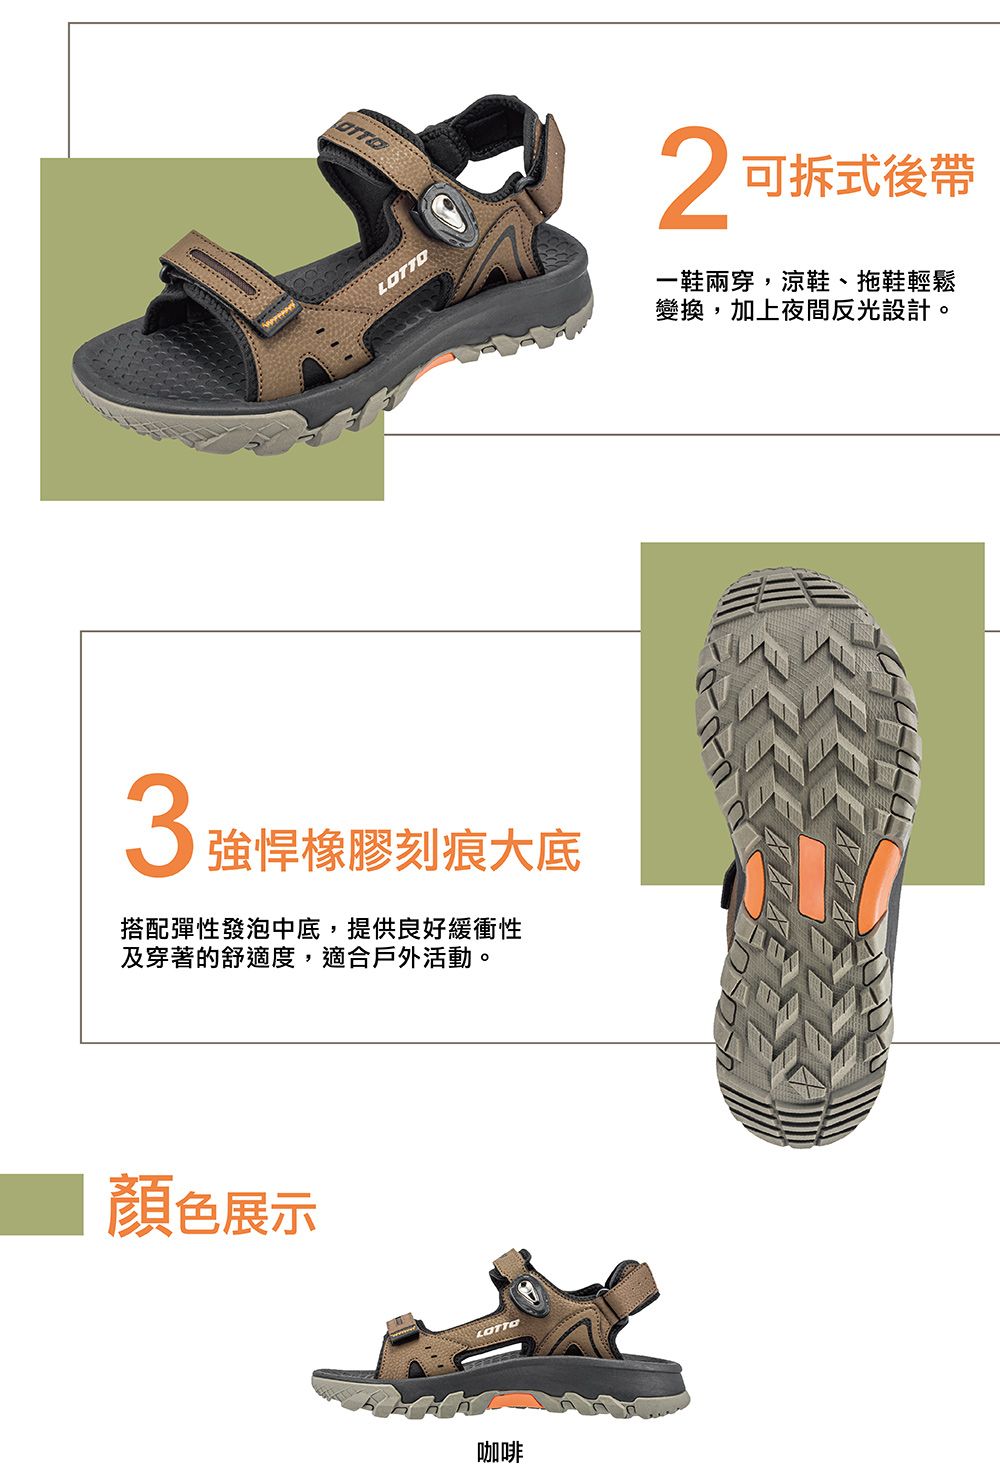 LOTTO3強悍橡膠刻痕大底搭配彈性發泡中底,提供良好緩衝性及穿著的舒適度,適合戶外活動。顏色展示咖啡 可拆式後帶一鞋兩穿,涼鞋、拖鞋輕鬆變換,加上夜間反光設計。